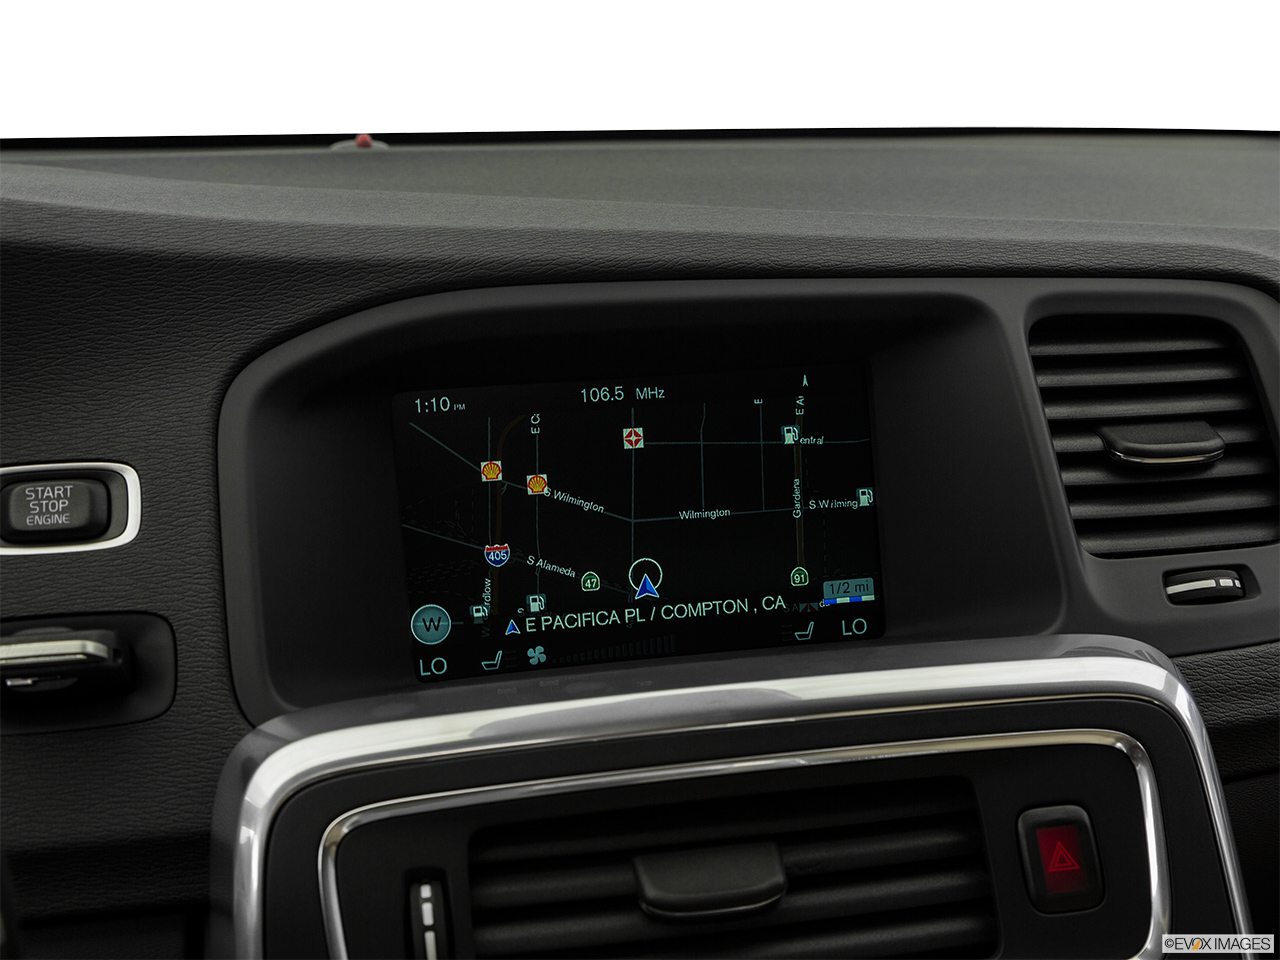 2017 Volvo V60 T5 Premier Driver position view of navigation system. 